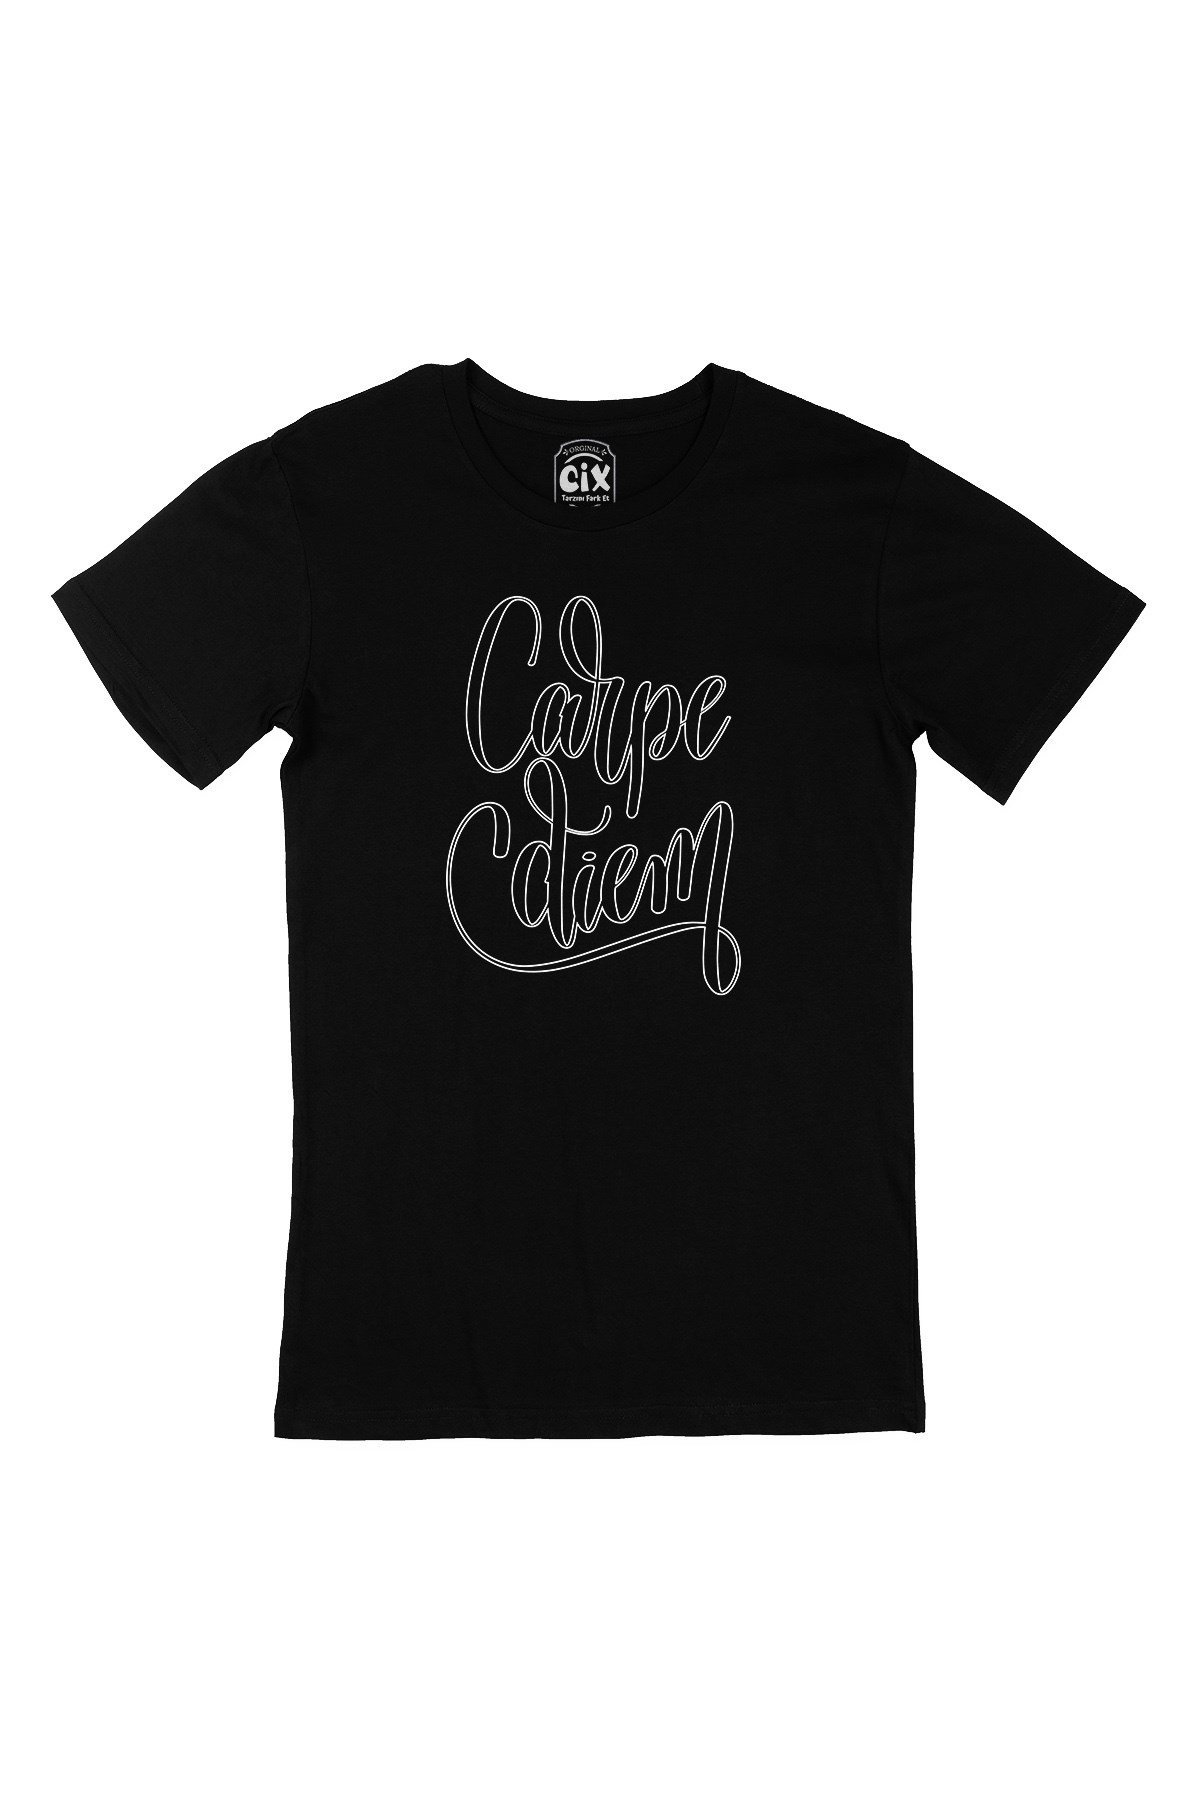 Cix Carpe Diem Siyah Tişört - Ücretsiz Kargo